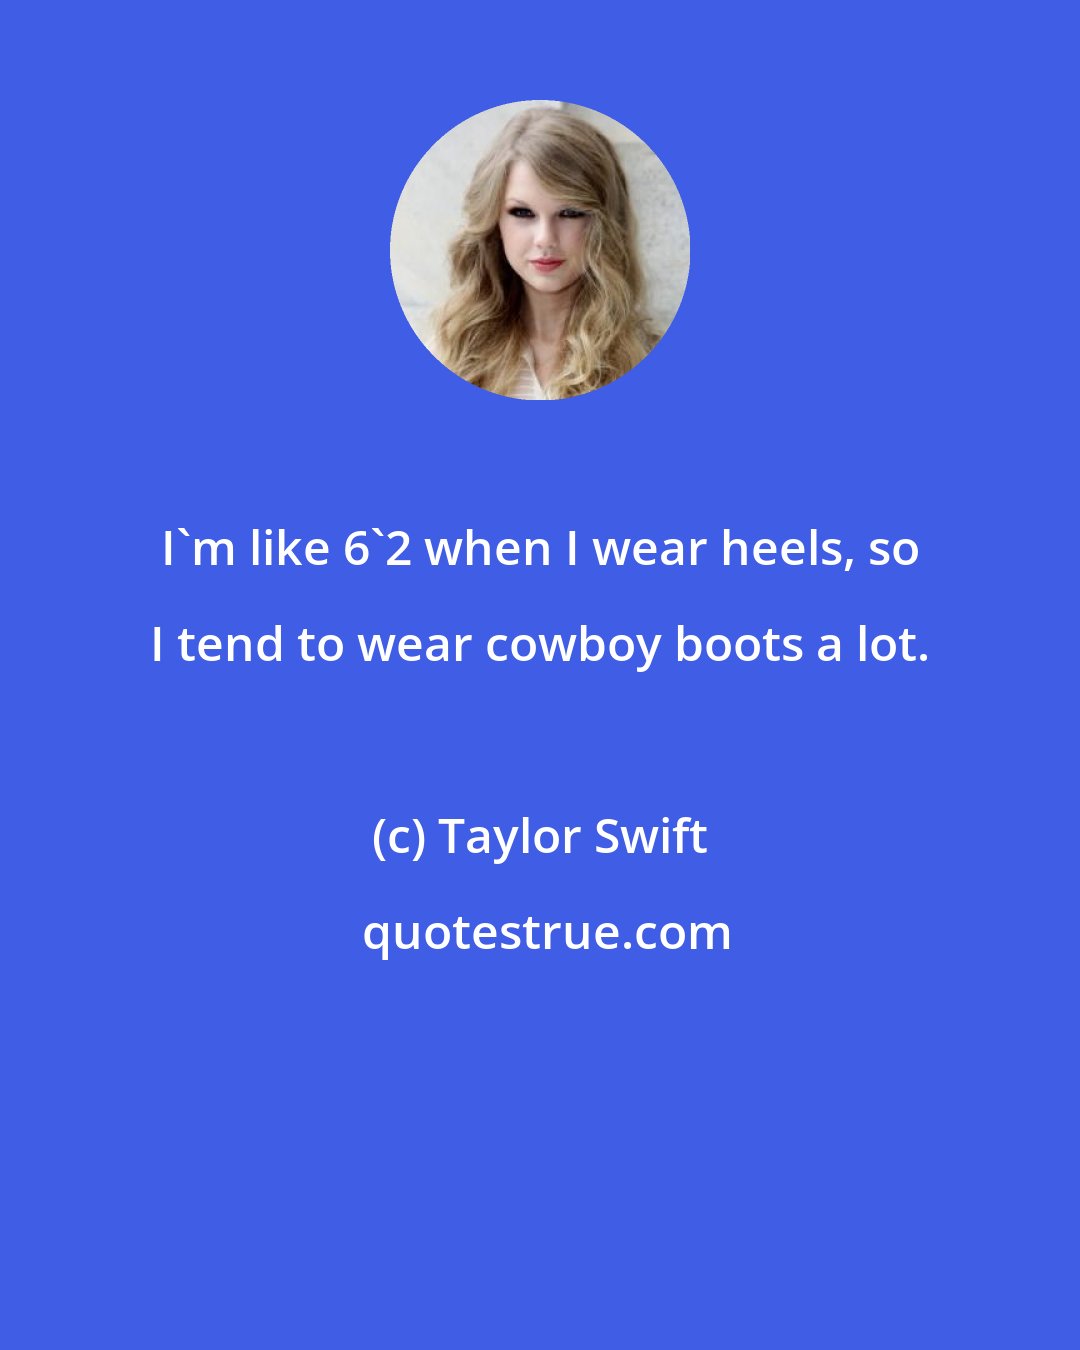 Taylor Swift: I'm like 6'2 when I wear heels, so I tend to wear cowboy boots a lot.